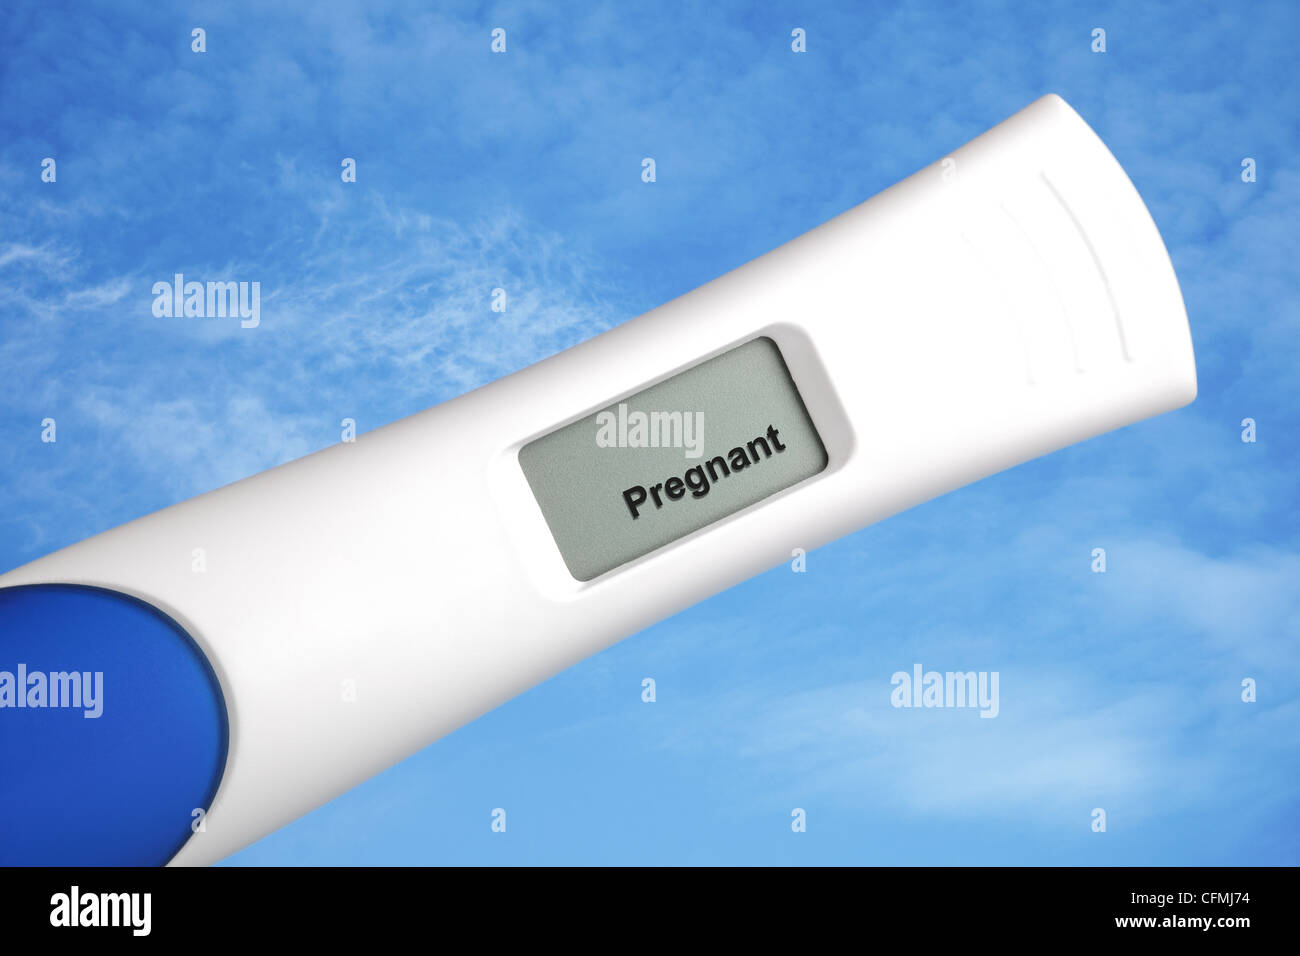 Pregnancy test Stock Photo